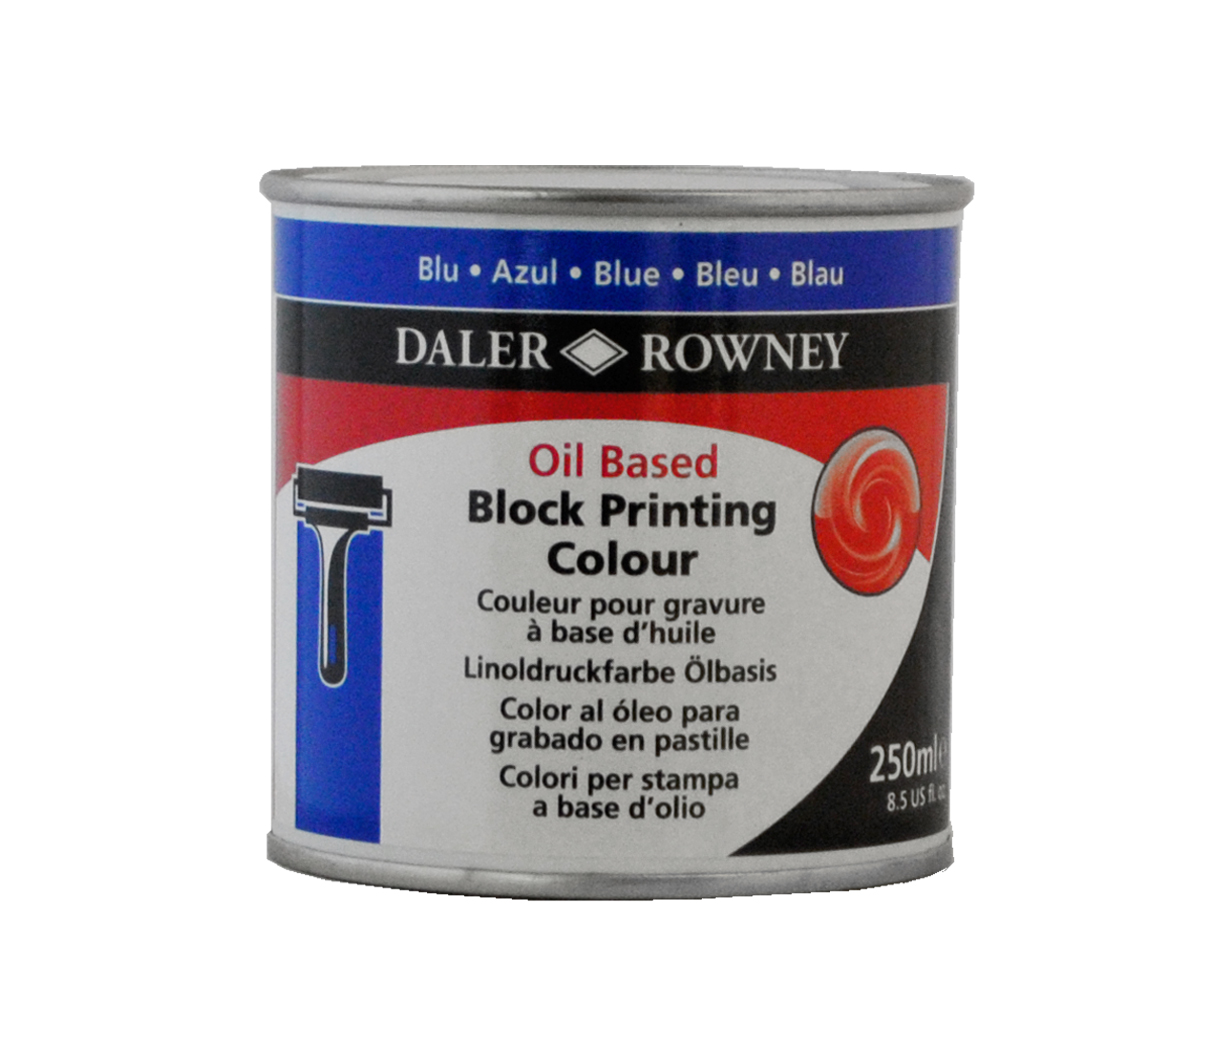 DALER ROWNEY BLUE BLOCK PRINTING INK OIL BASED